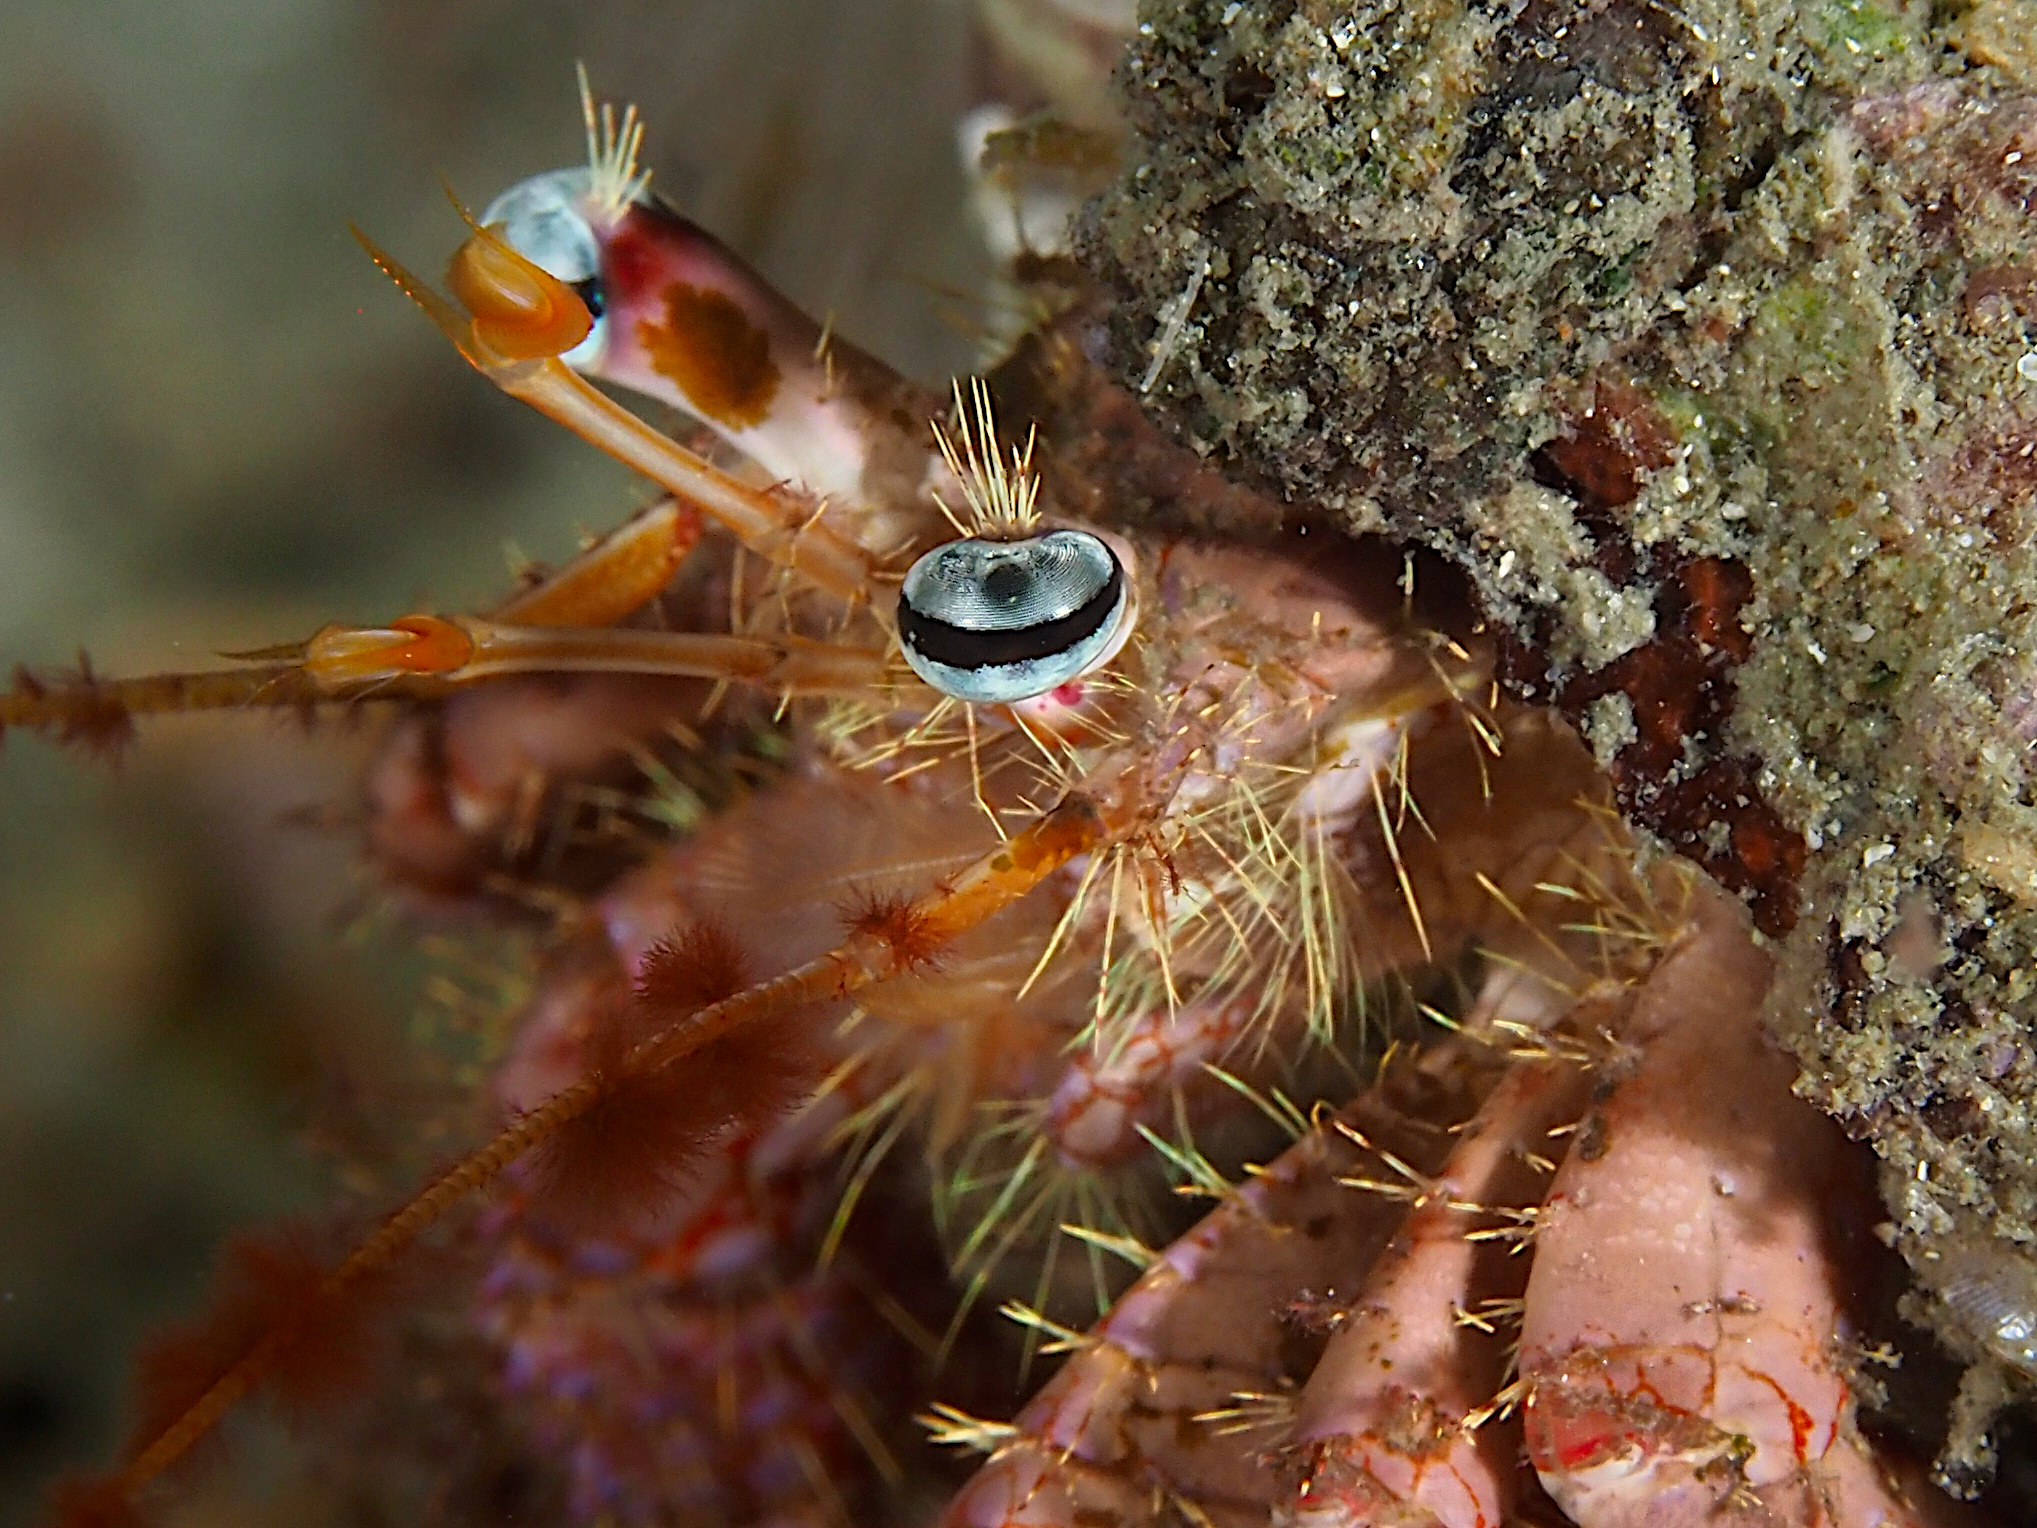 Bareye Hermit Crab - Dardanus fucosus